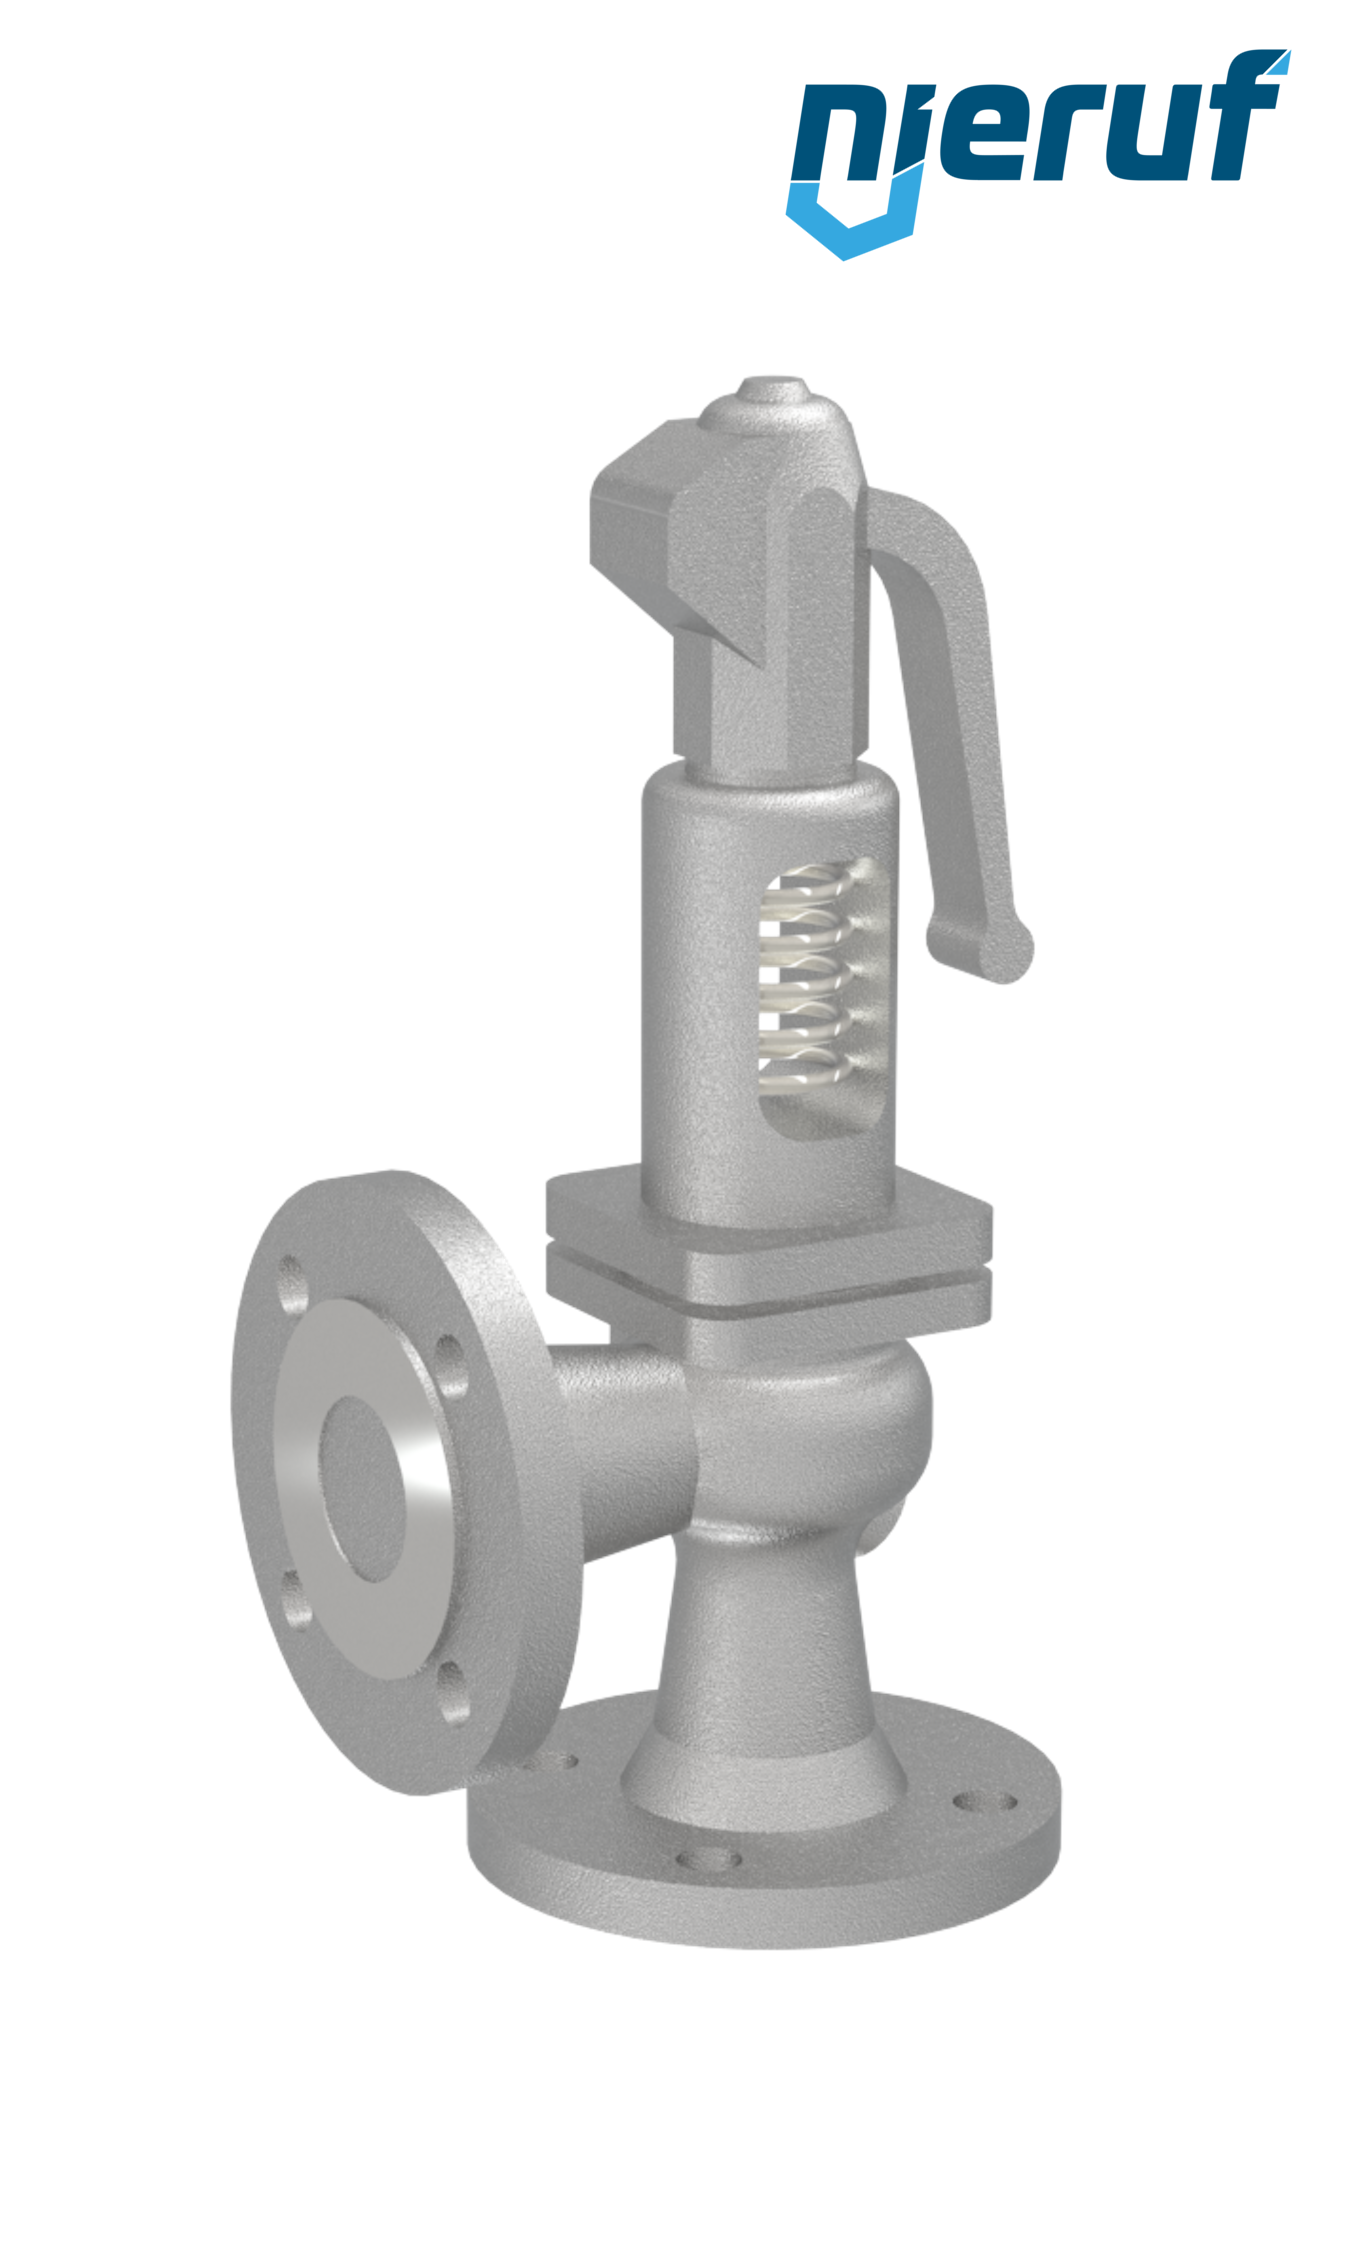 flange-safety valve DN50/DN50 SF0102, cast iron EN-JL1040 FPM, with lever